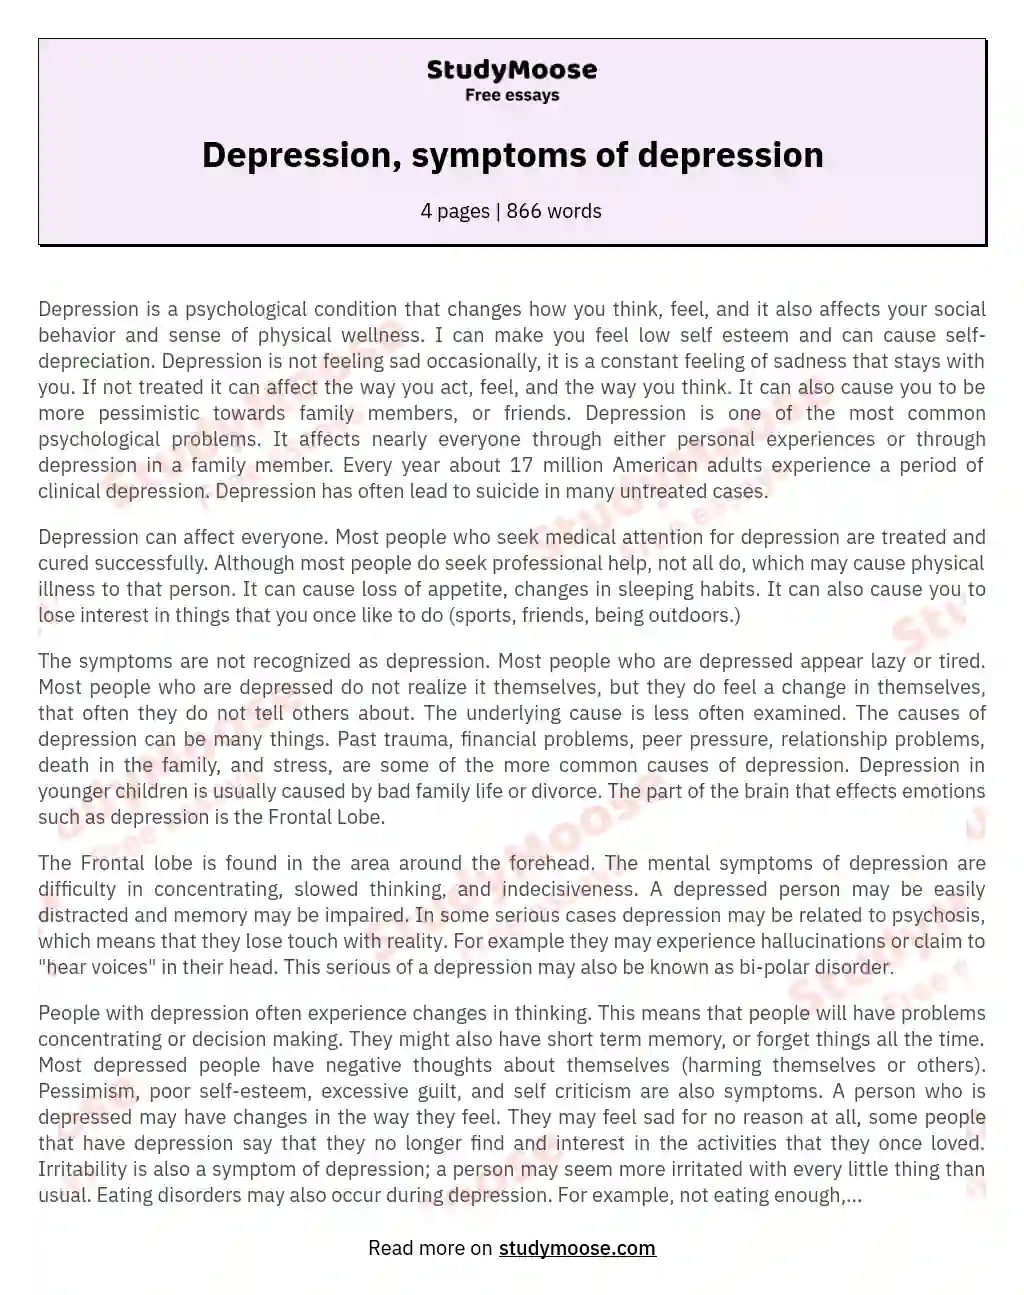 Depression, symptoms of depression essay